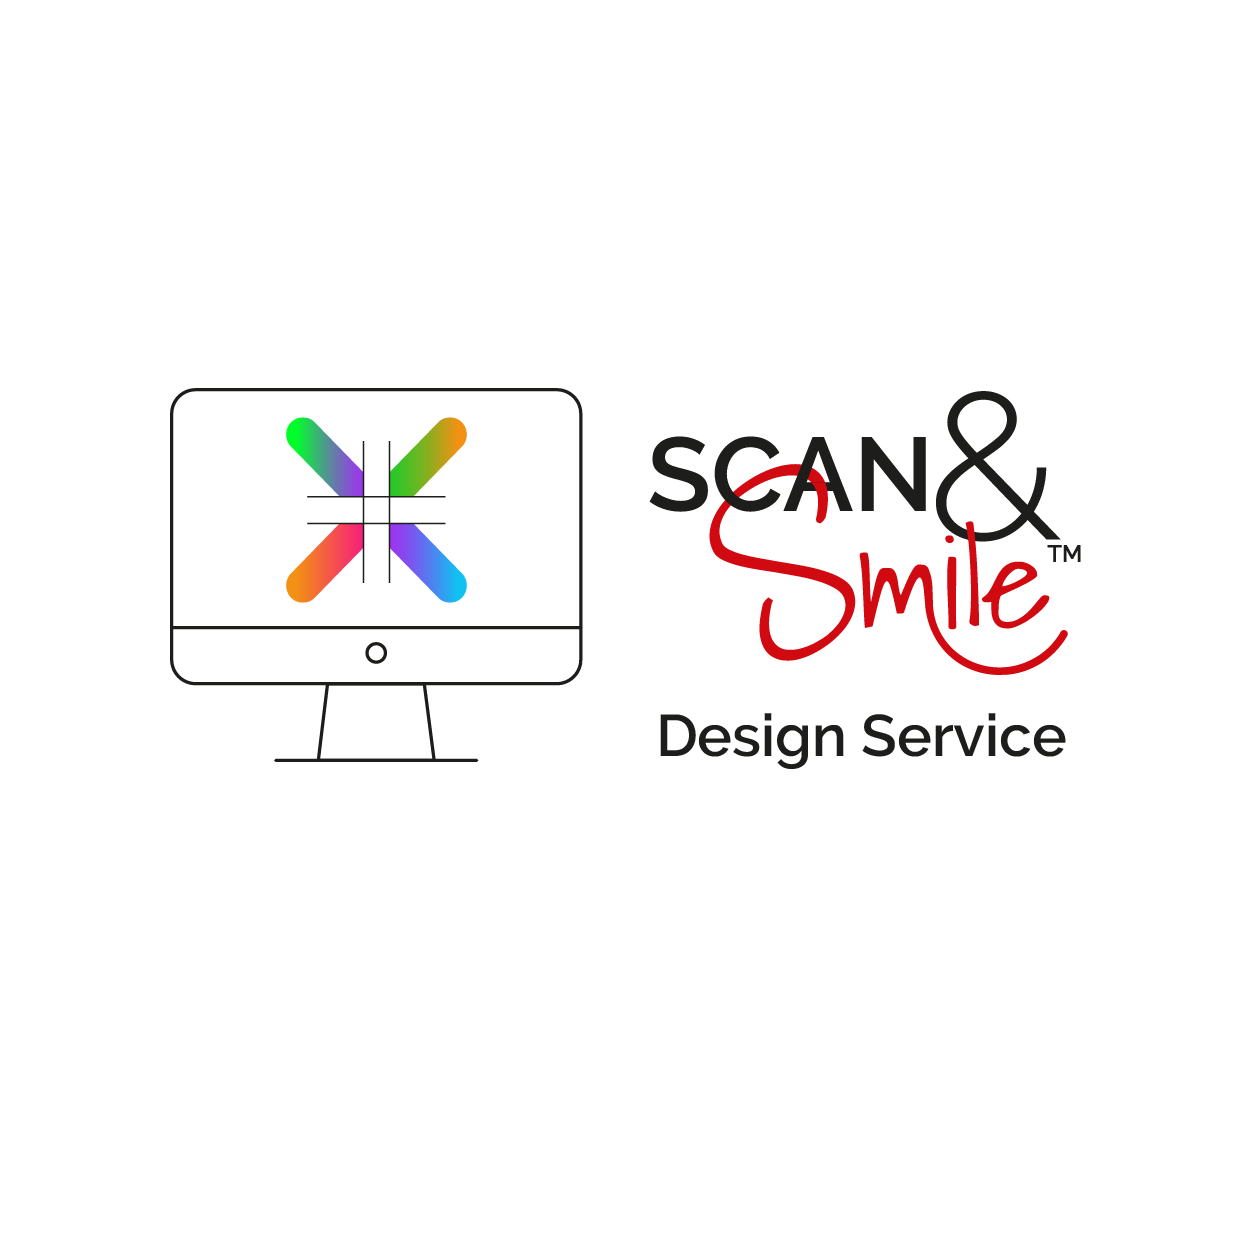 02_new design service logo